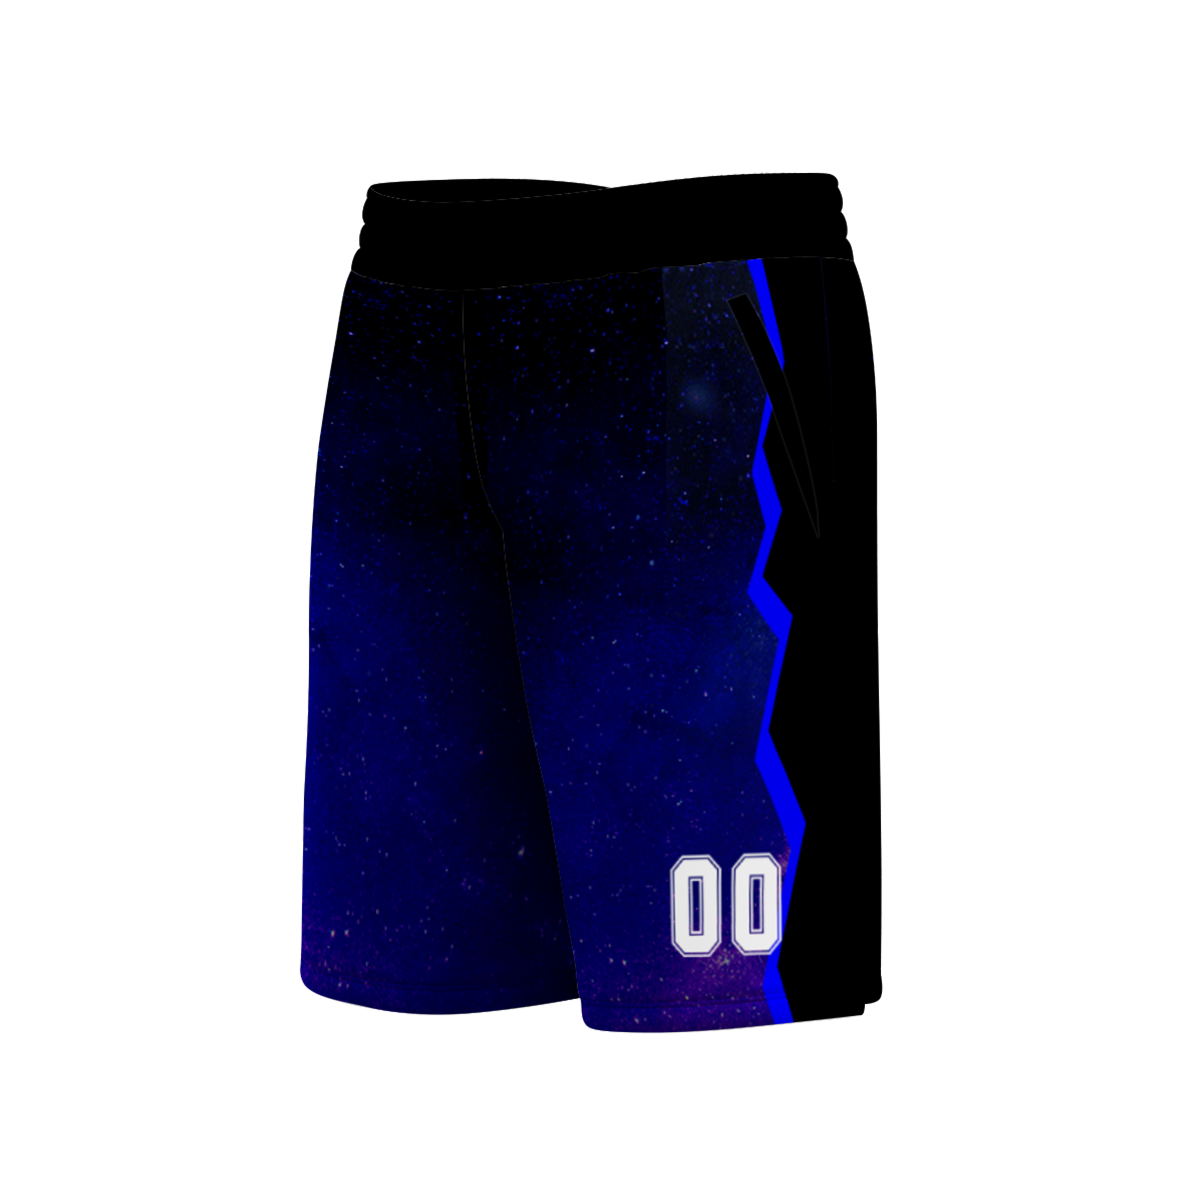 personalized-design-customized-basketball-jersey-wholesale-blank-sublimation-basketball-wear-suit-print-on-demand-uniform-cloth-set-at-cj-pod-8